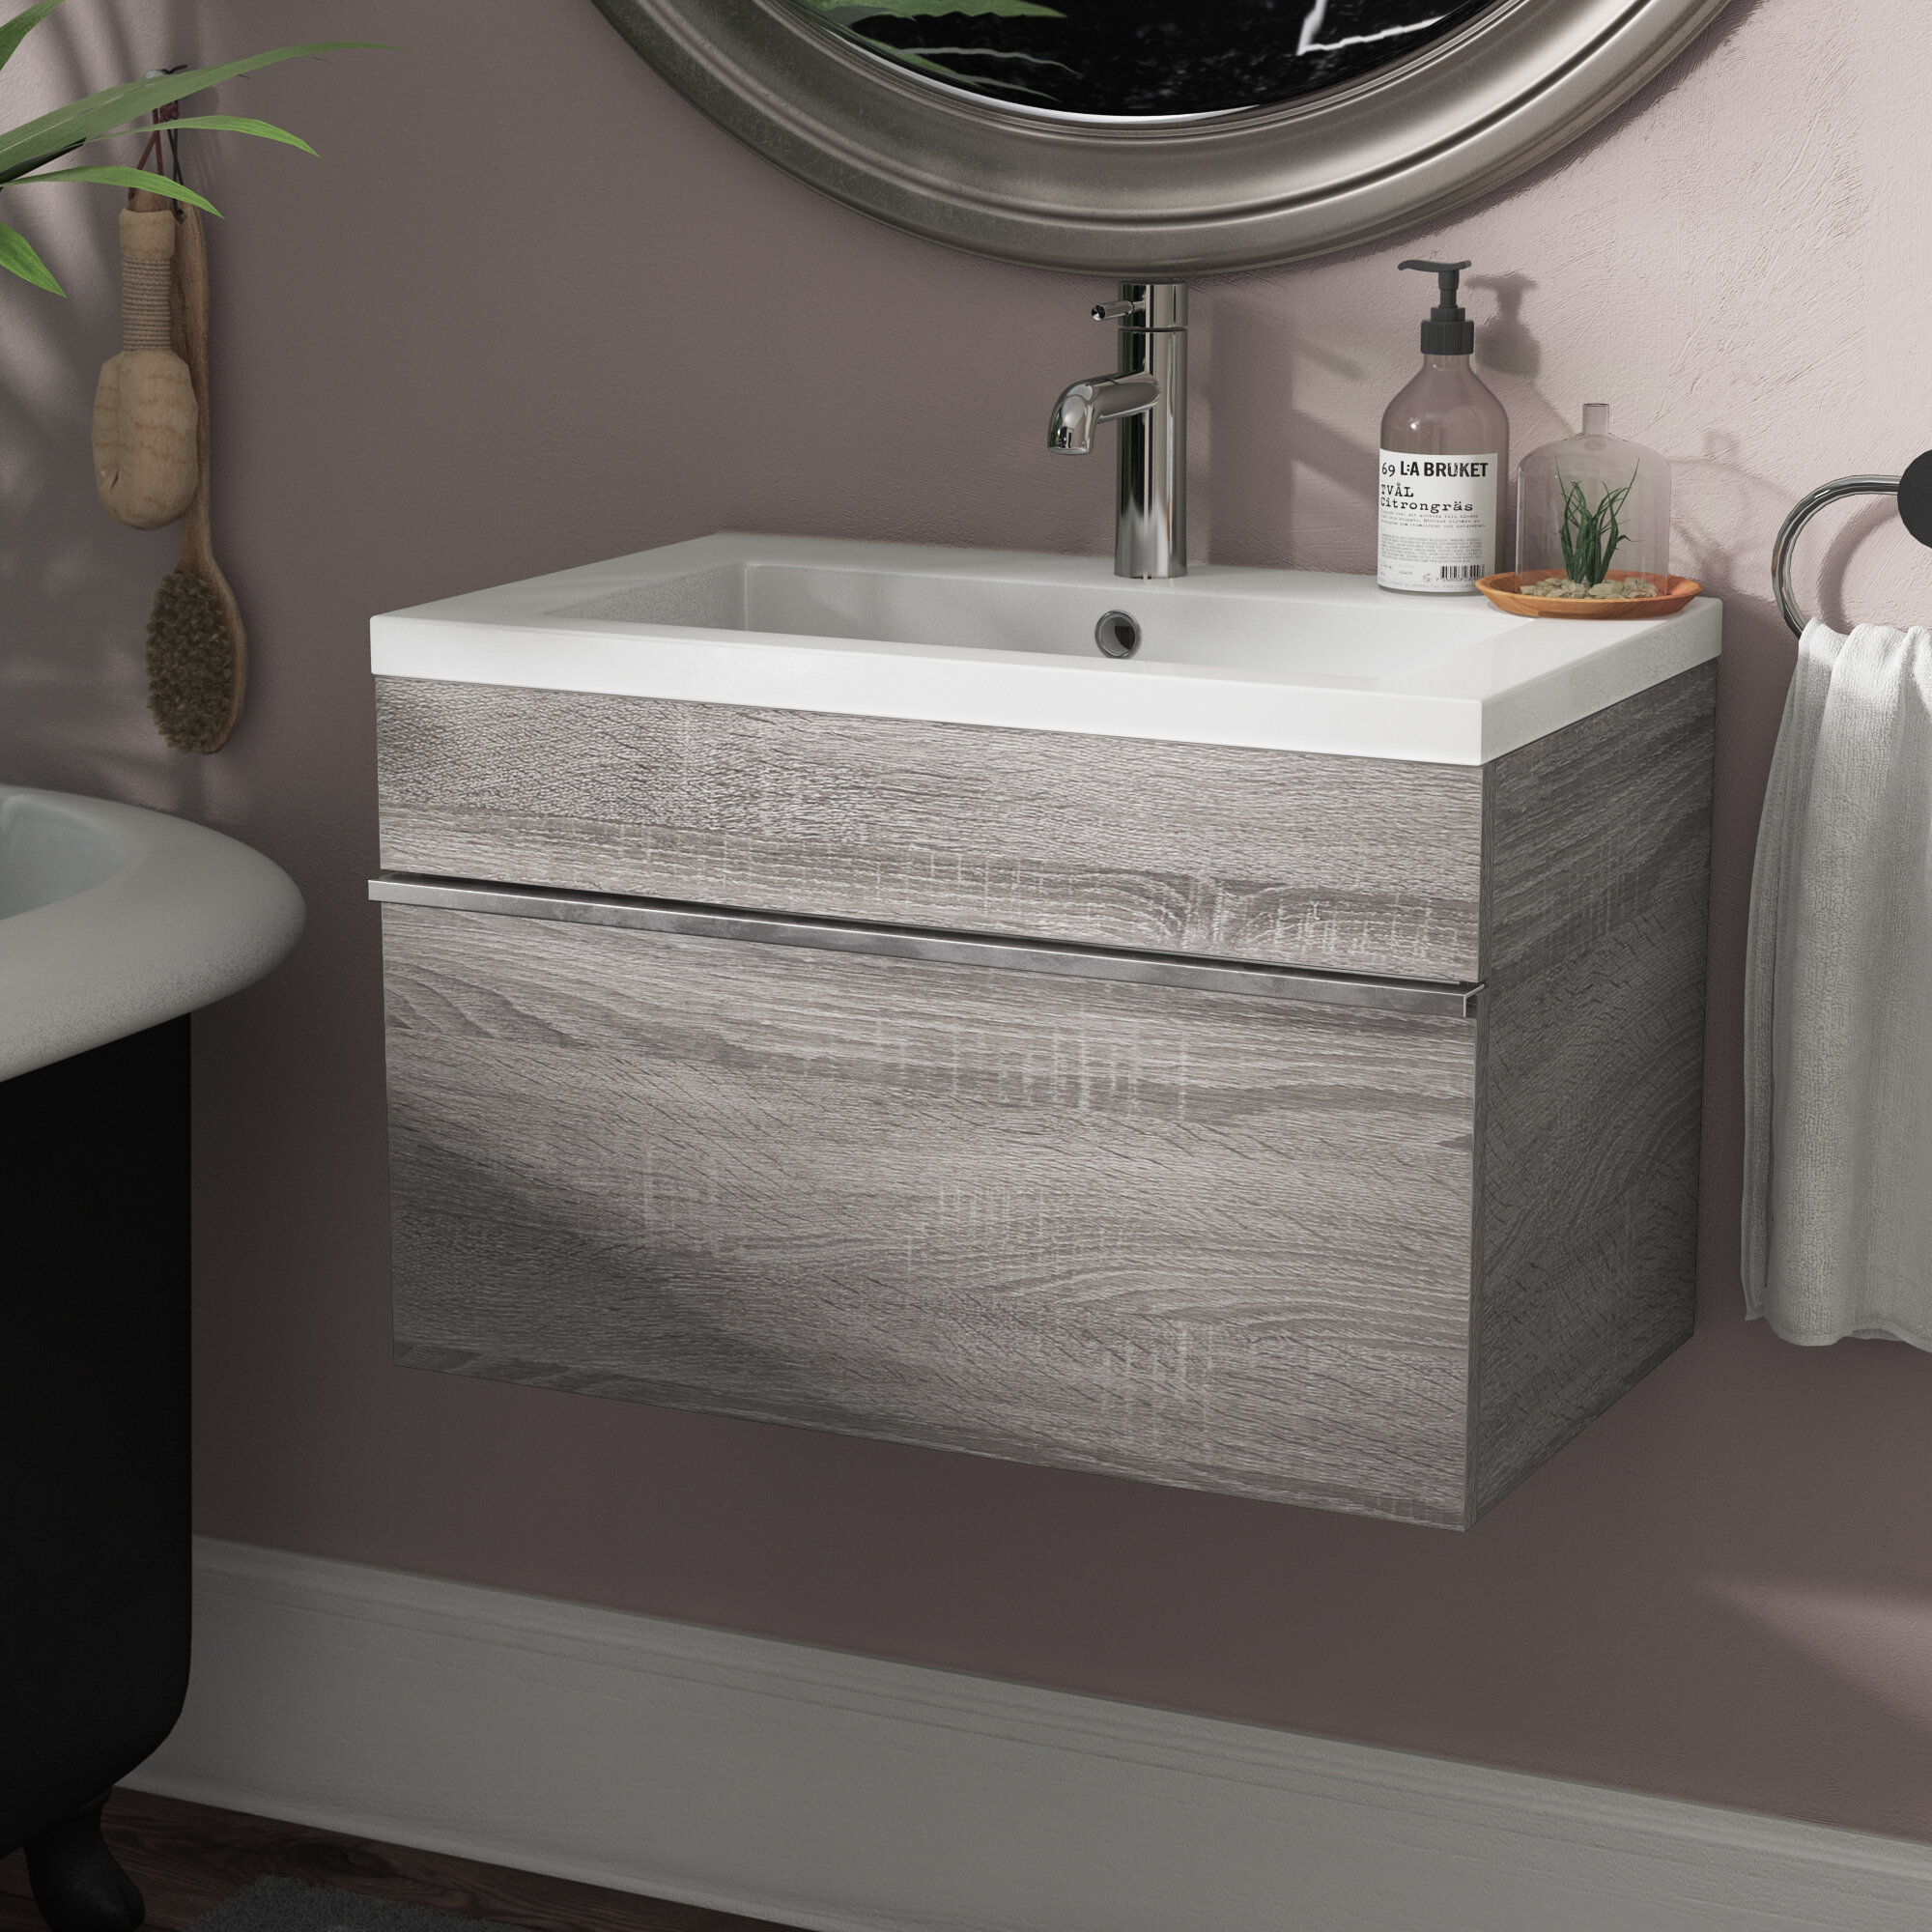 Ivy Bronx Hewlett 24 Wall Mounted Single Bathroom Vanity Set Reviews Wayfair